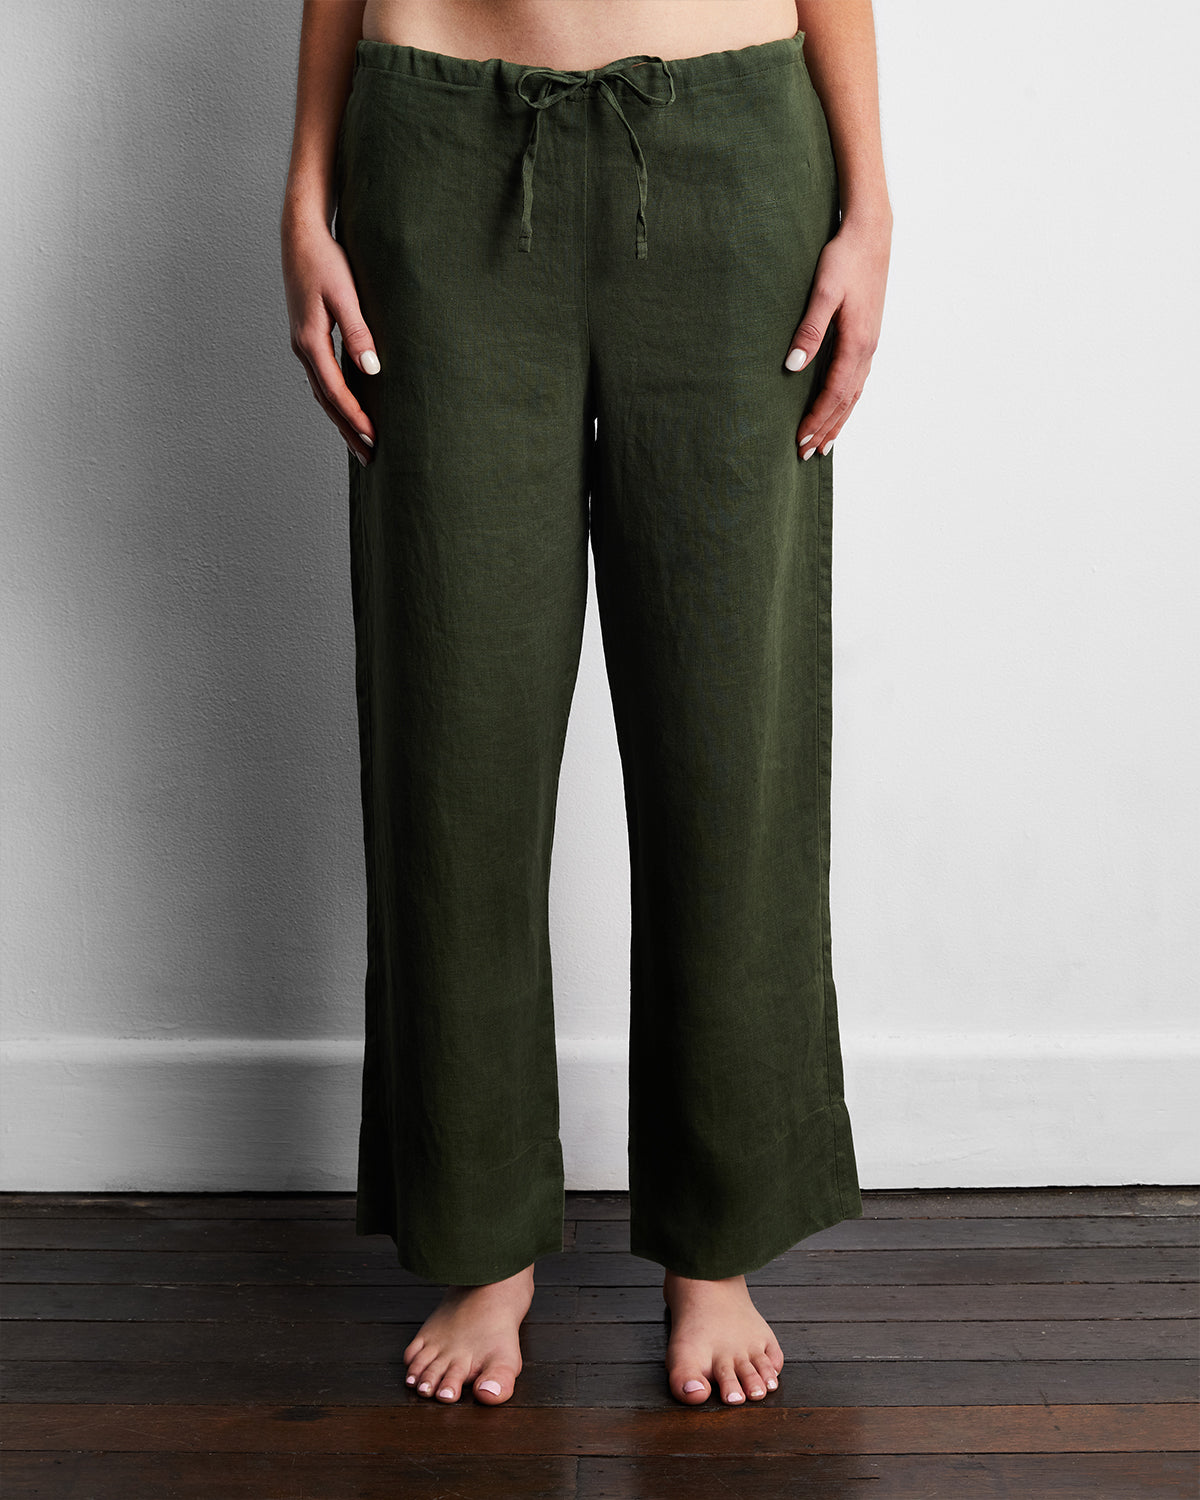 Women's Pajama Pants Light Sage Green Color Women Pjs Bottoms Wide Leg  Lounge Palazzo Yoga Drawstring Pants XS